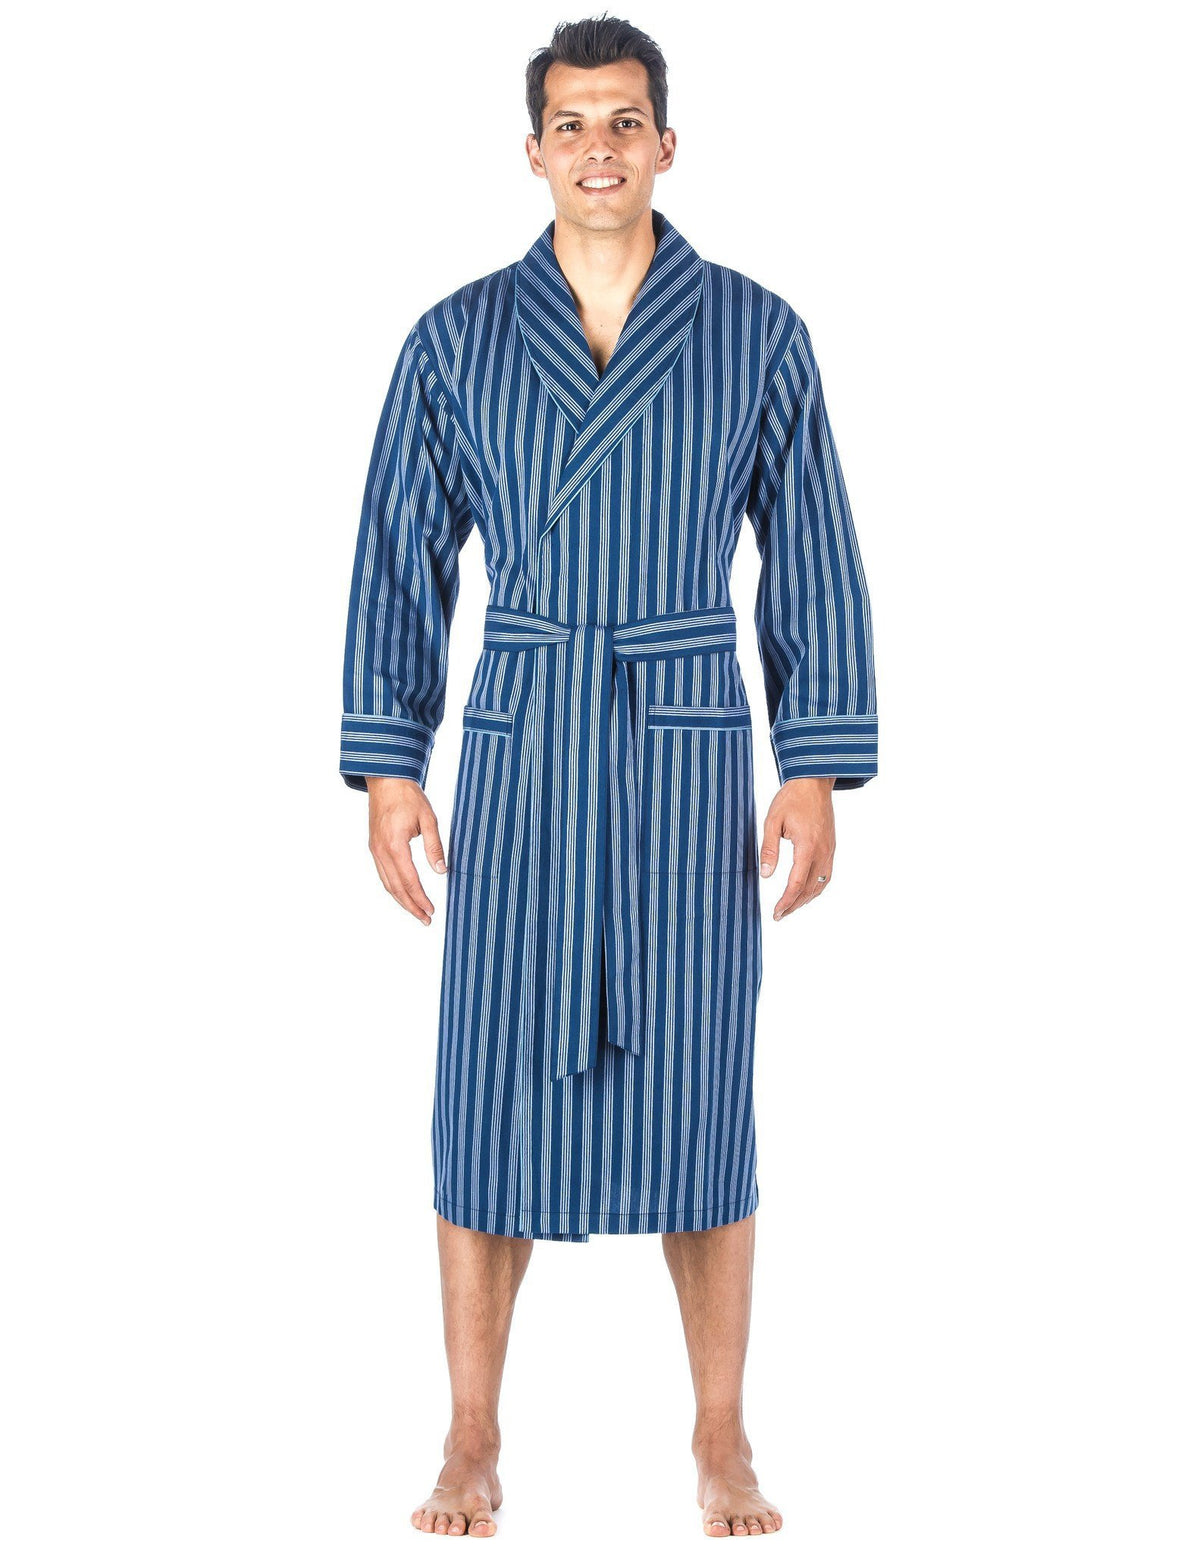 Mens Premium 100% Cotton Robe - Stripes Blue Tone